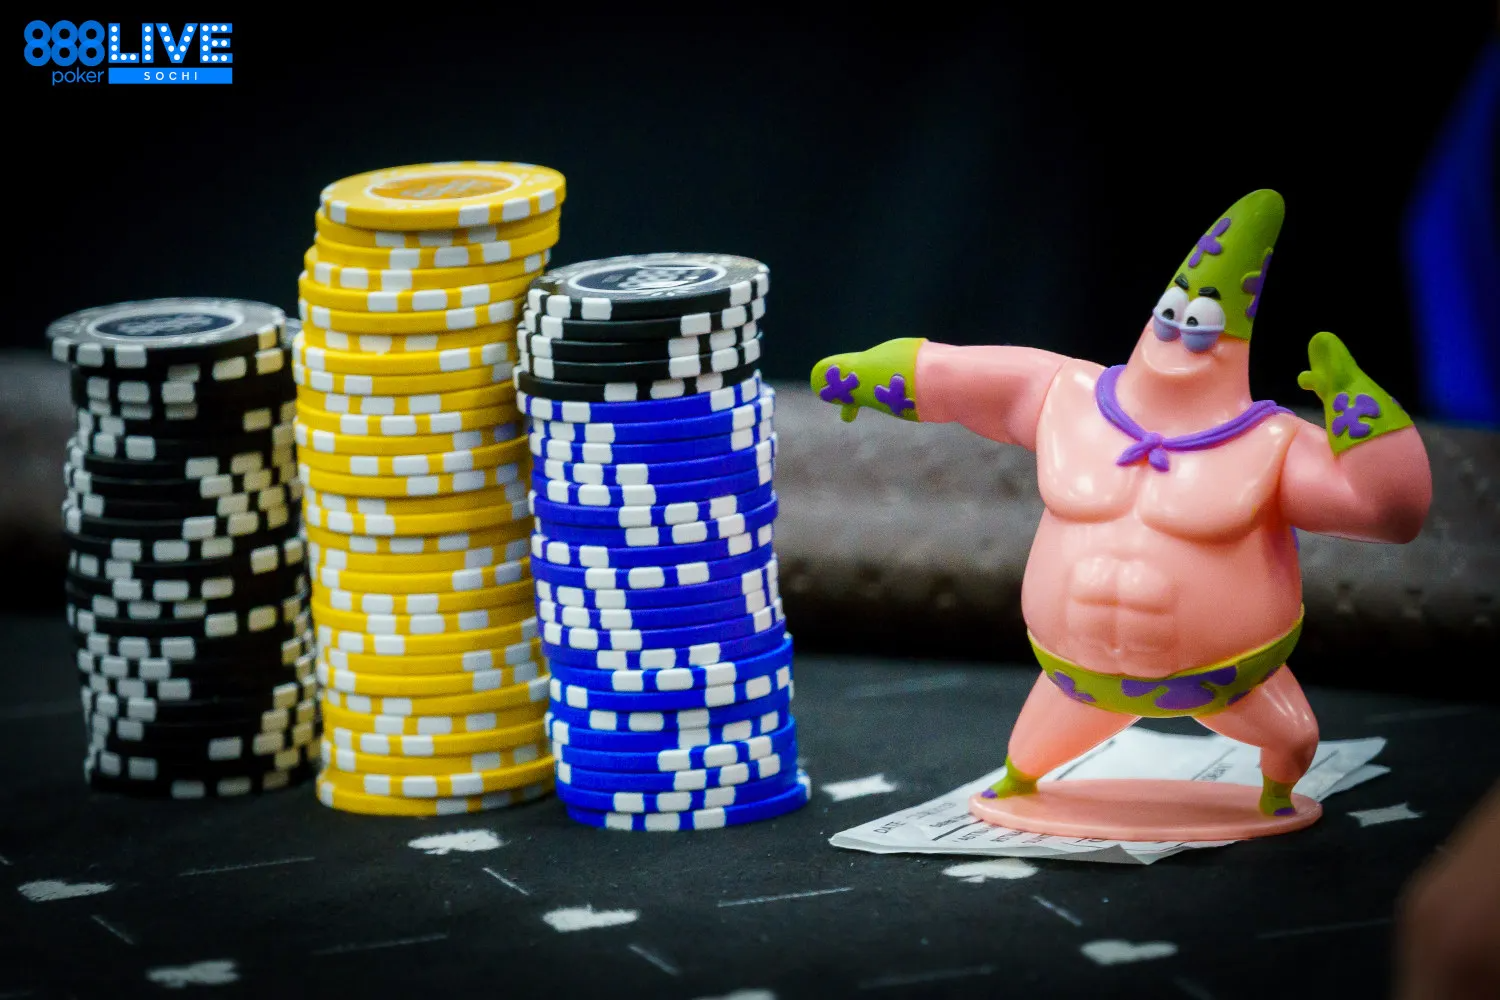 jogadores de poker perdem